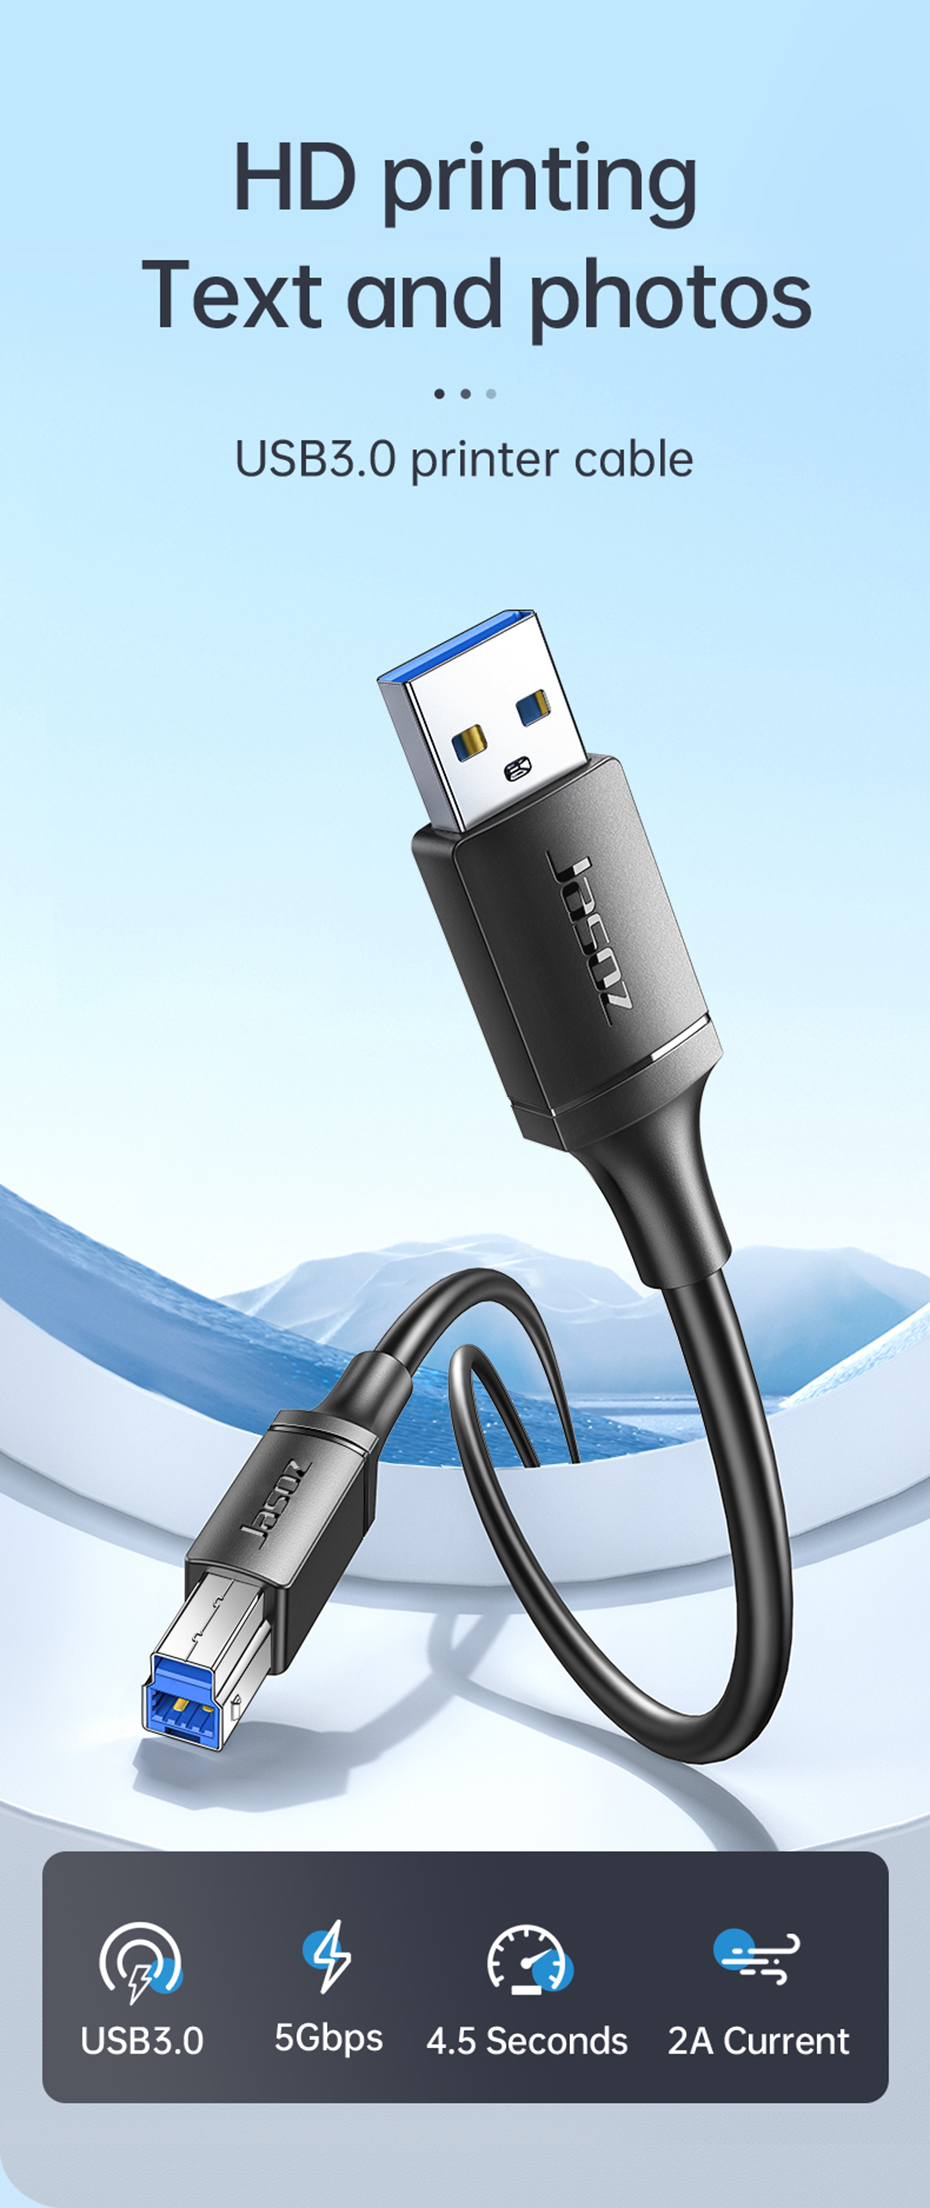 Rallonge USB 3.0 2m - CONSOMMABLES - Nozzler